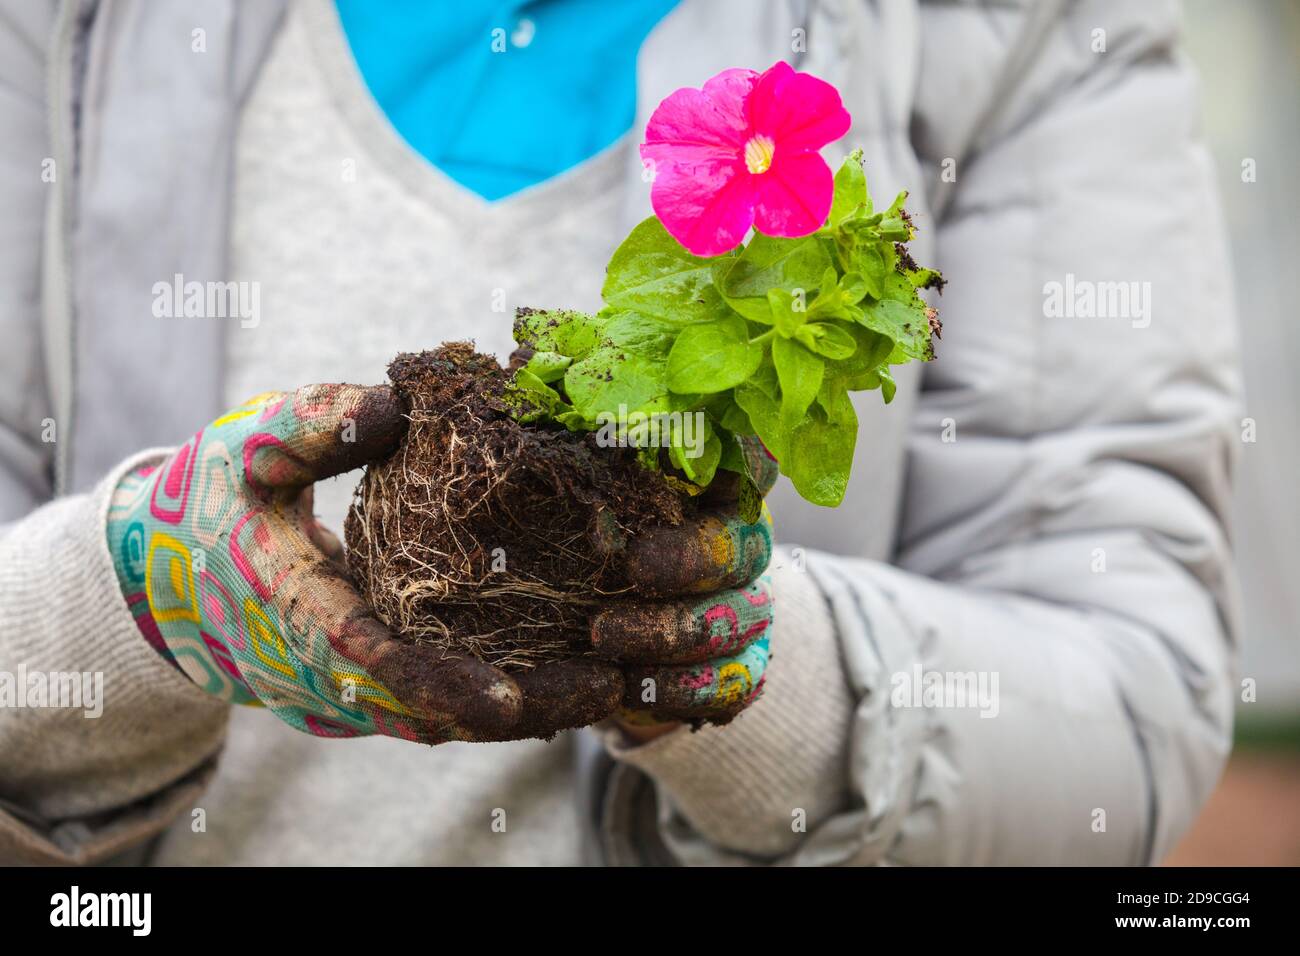 Gärtner hält Petunia Sämling mit rosa Blume, Nahaufnahme Foto mit selektiven weichen Fokus Stockfoto